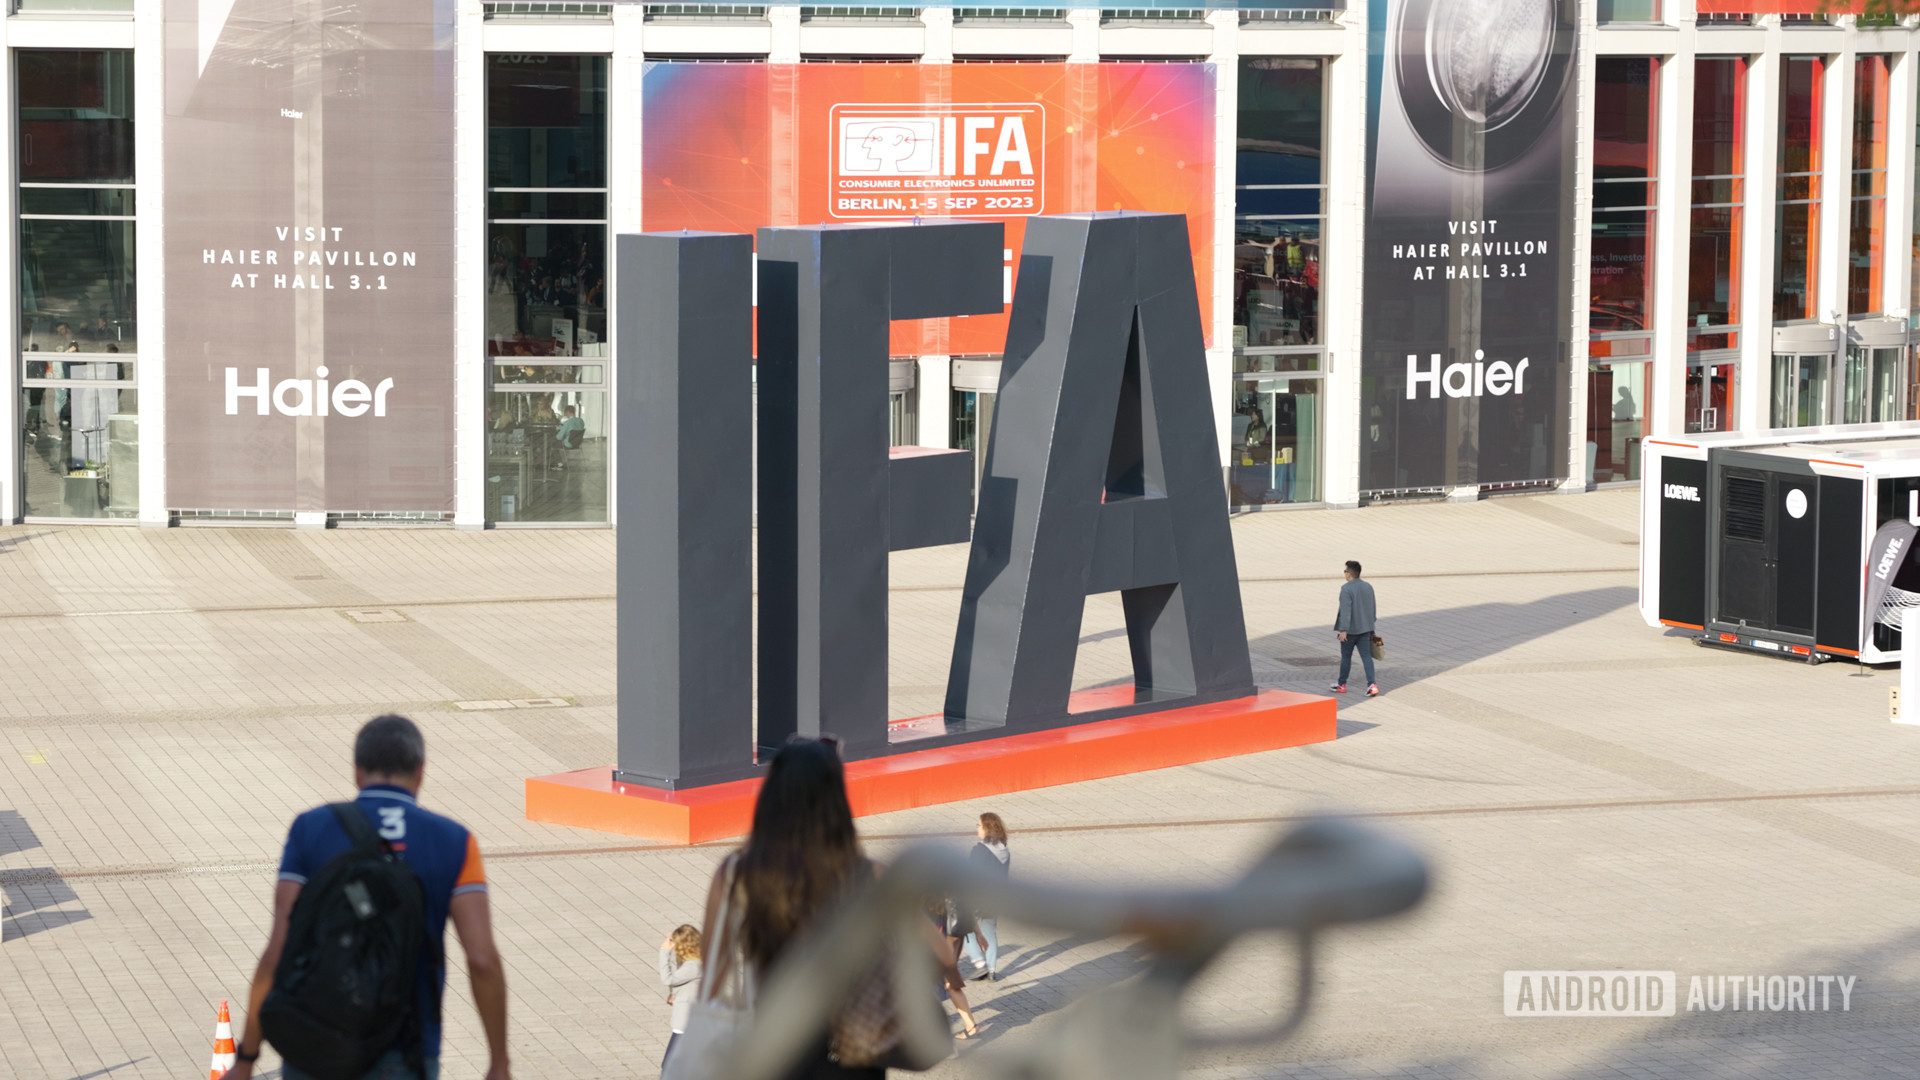 IFA logo with crowd